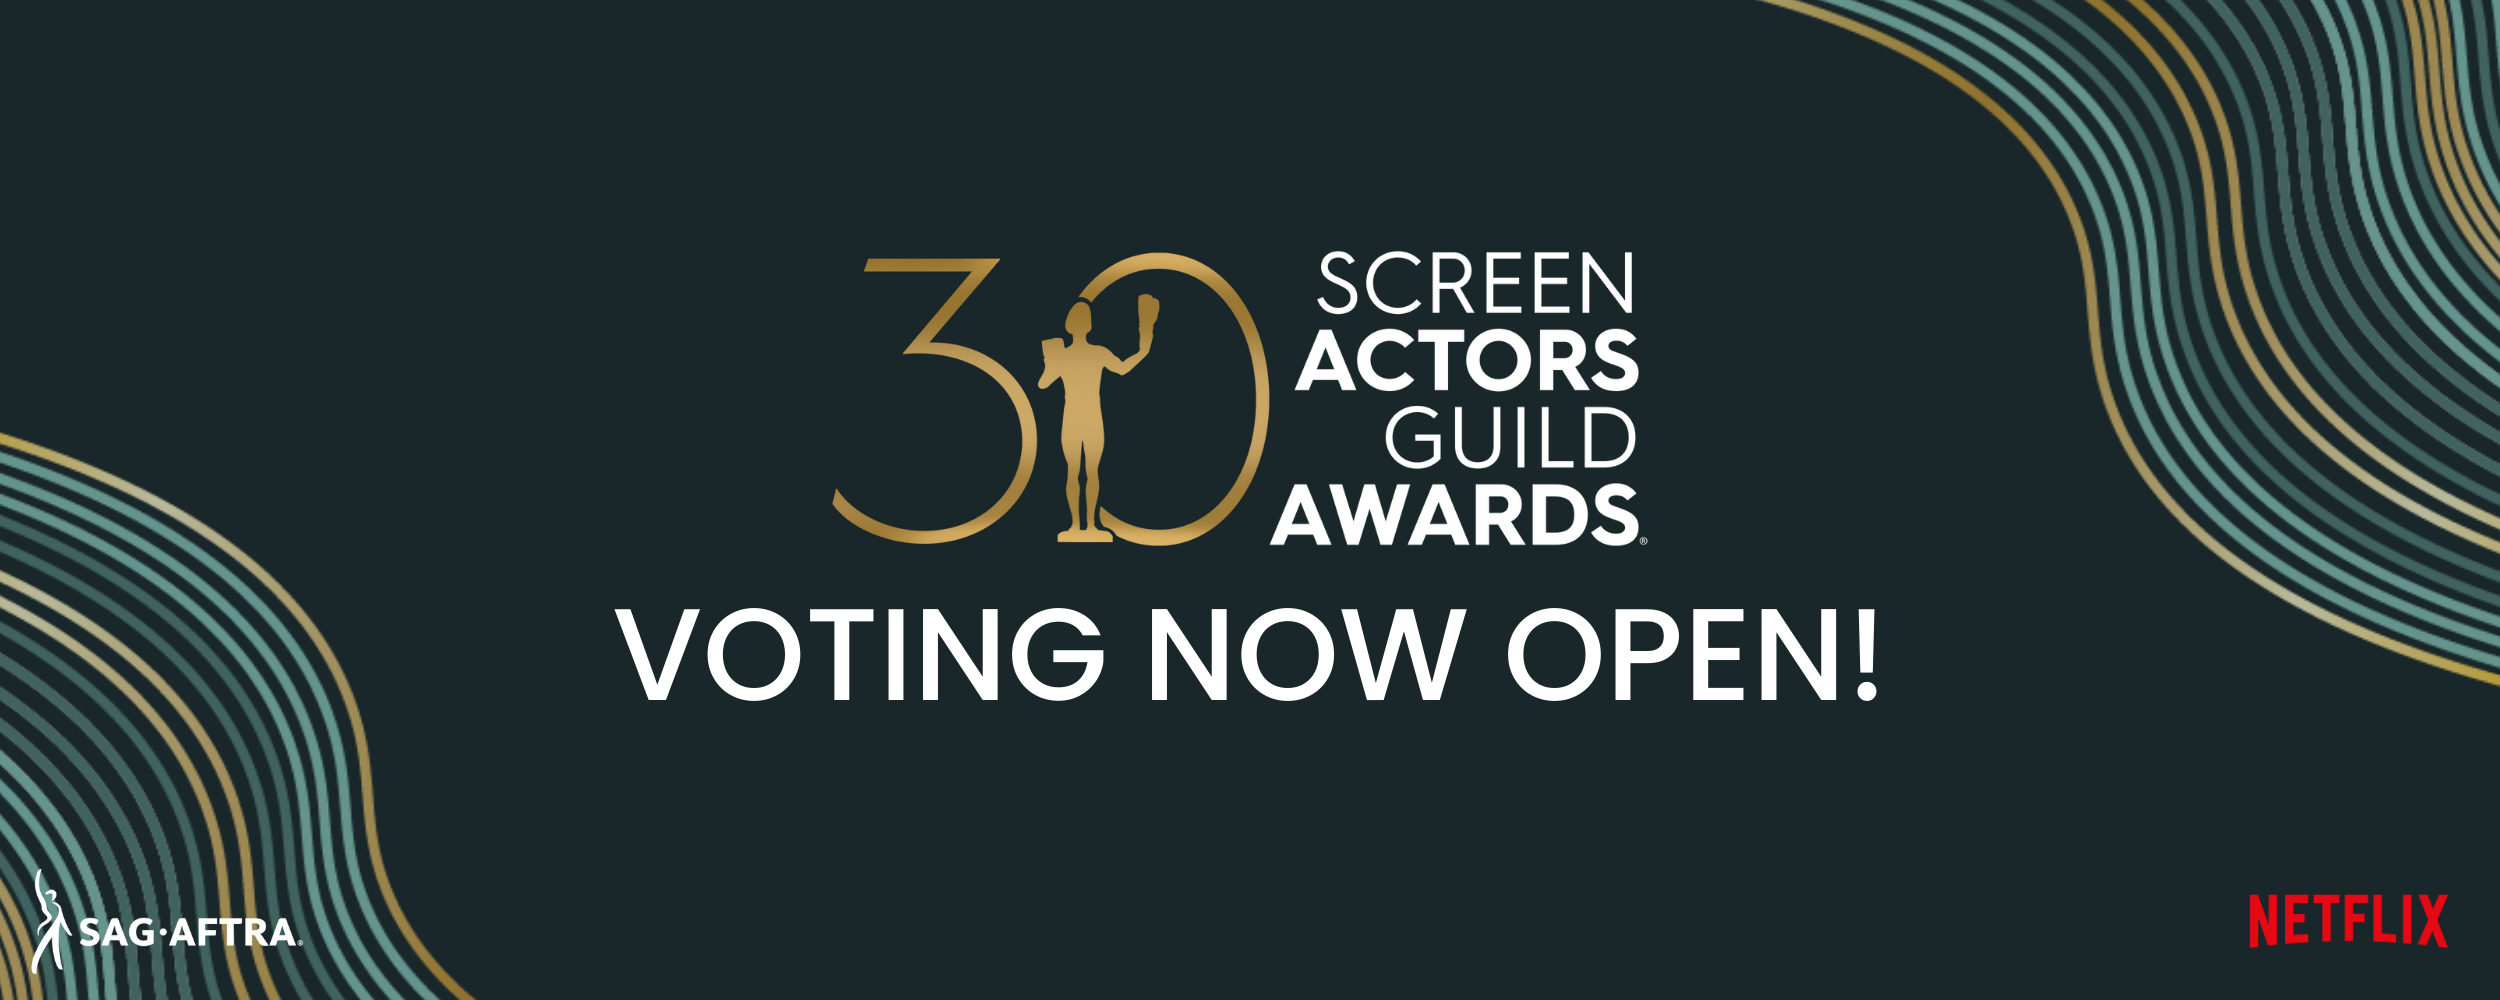 30th Screen Actors Guild Awards: Voting Now Open